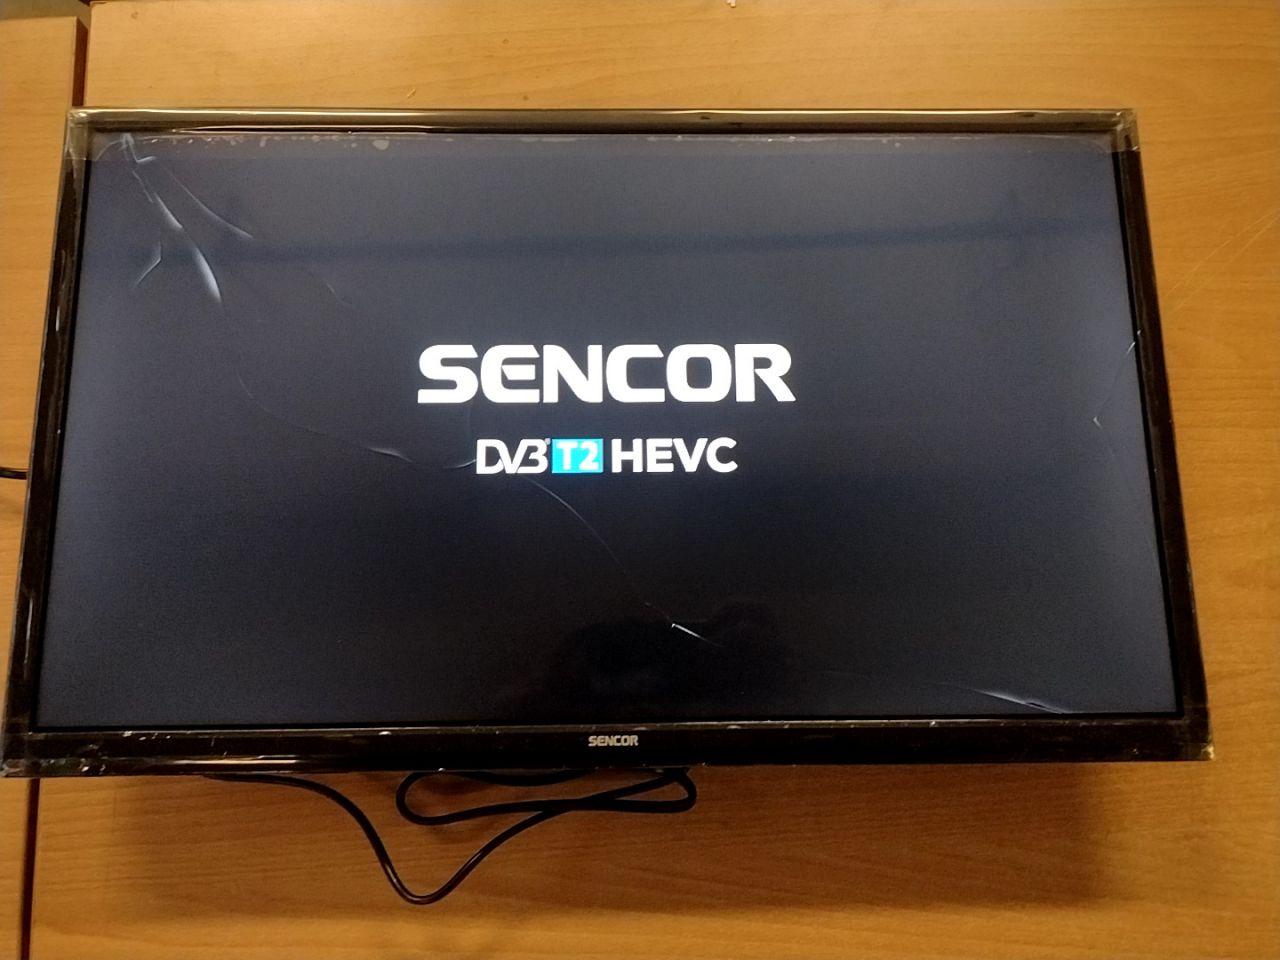 Televize Sencor SLE 2472TCS SE